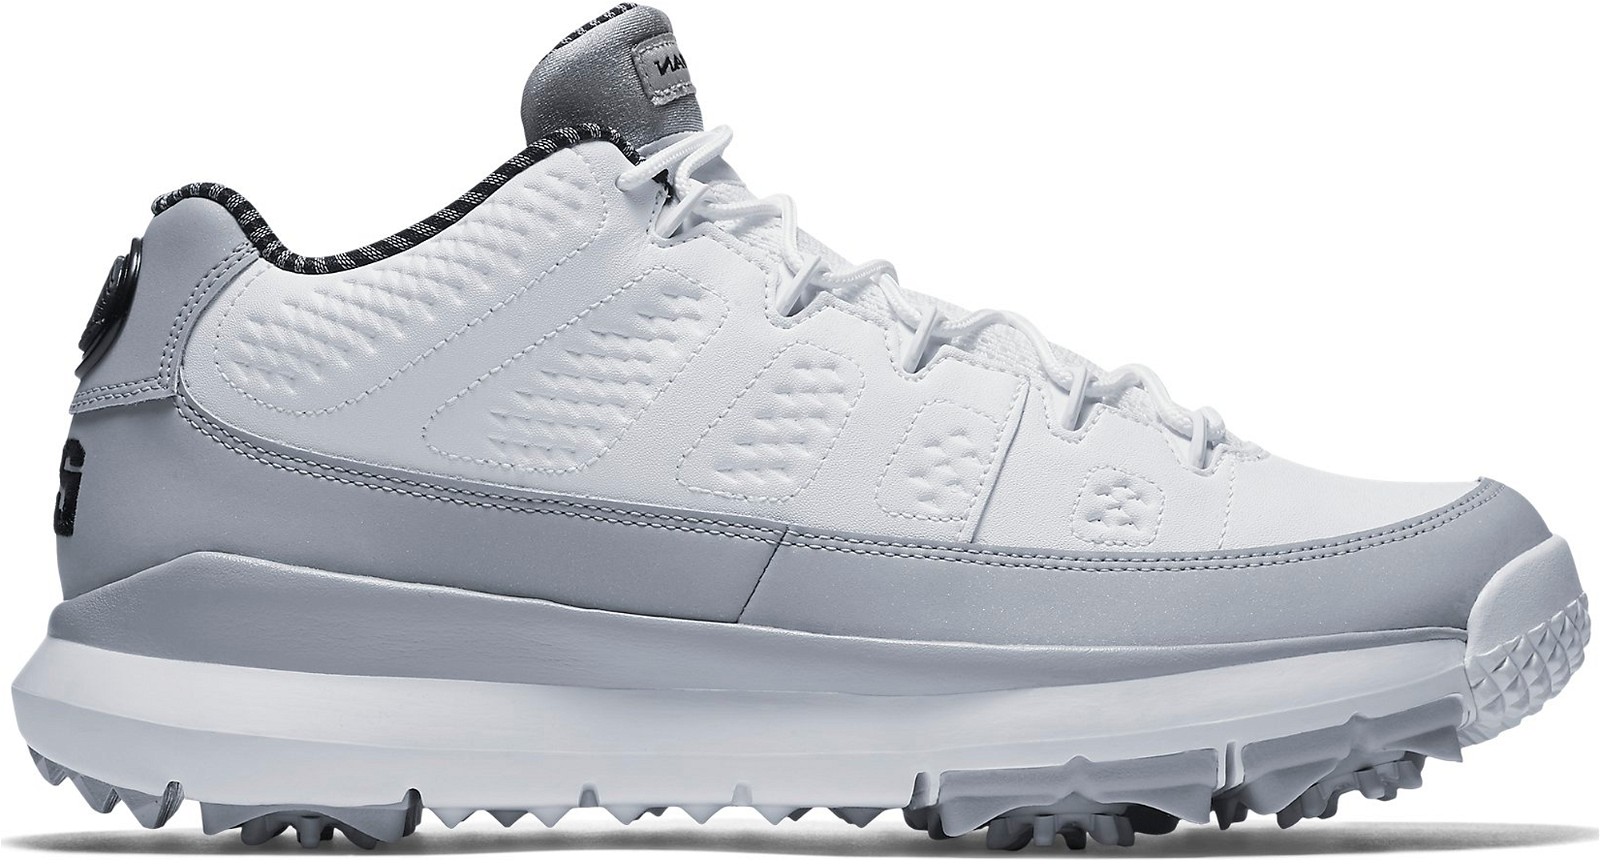 Jordan 9 Retro Golf Cleat Wolf Grey sneakers